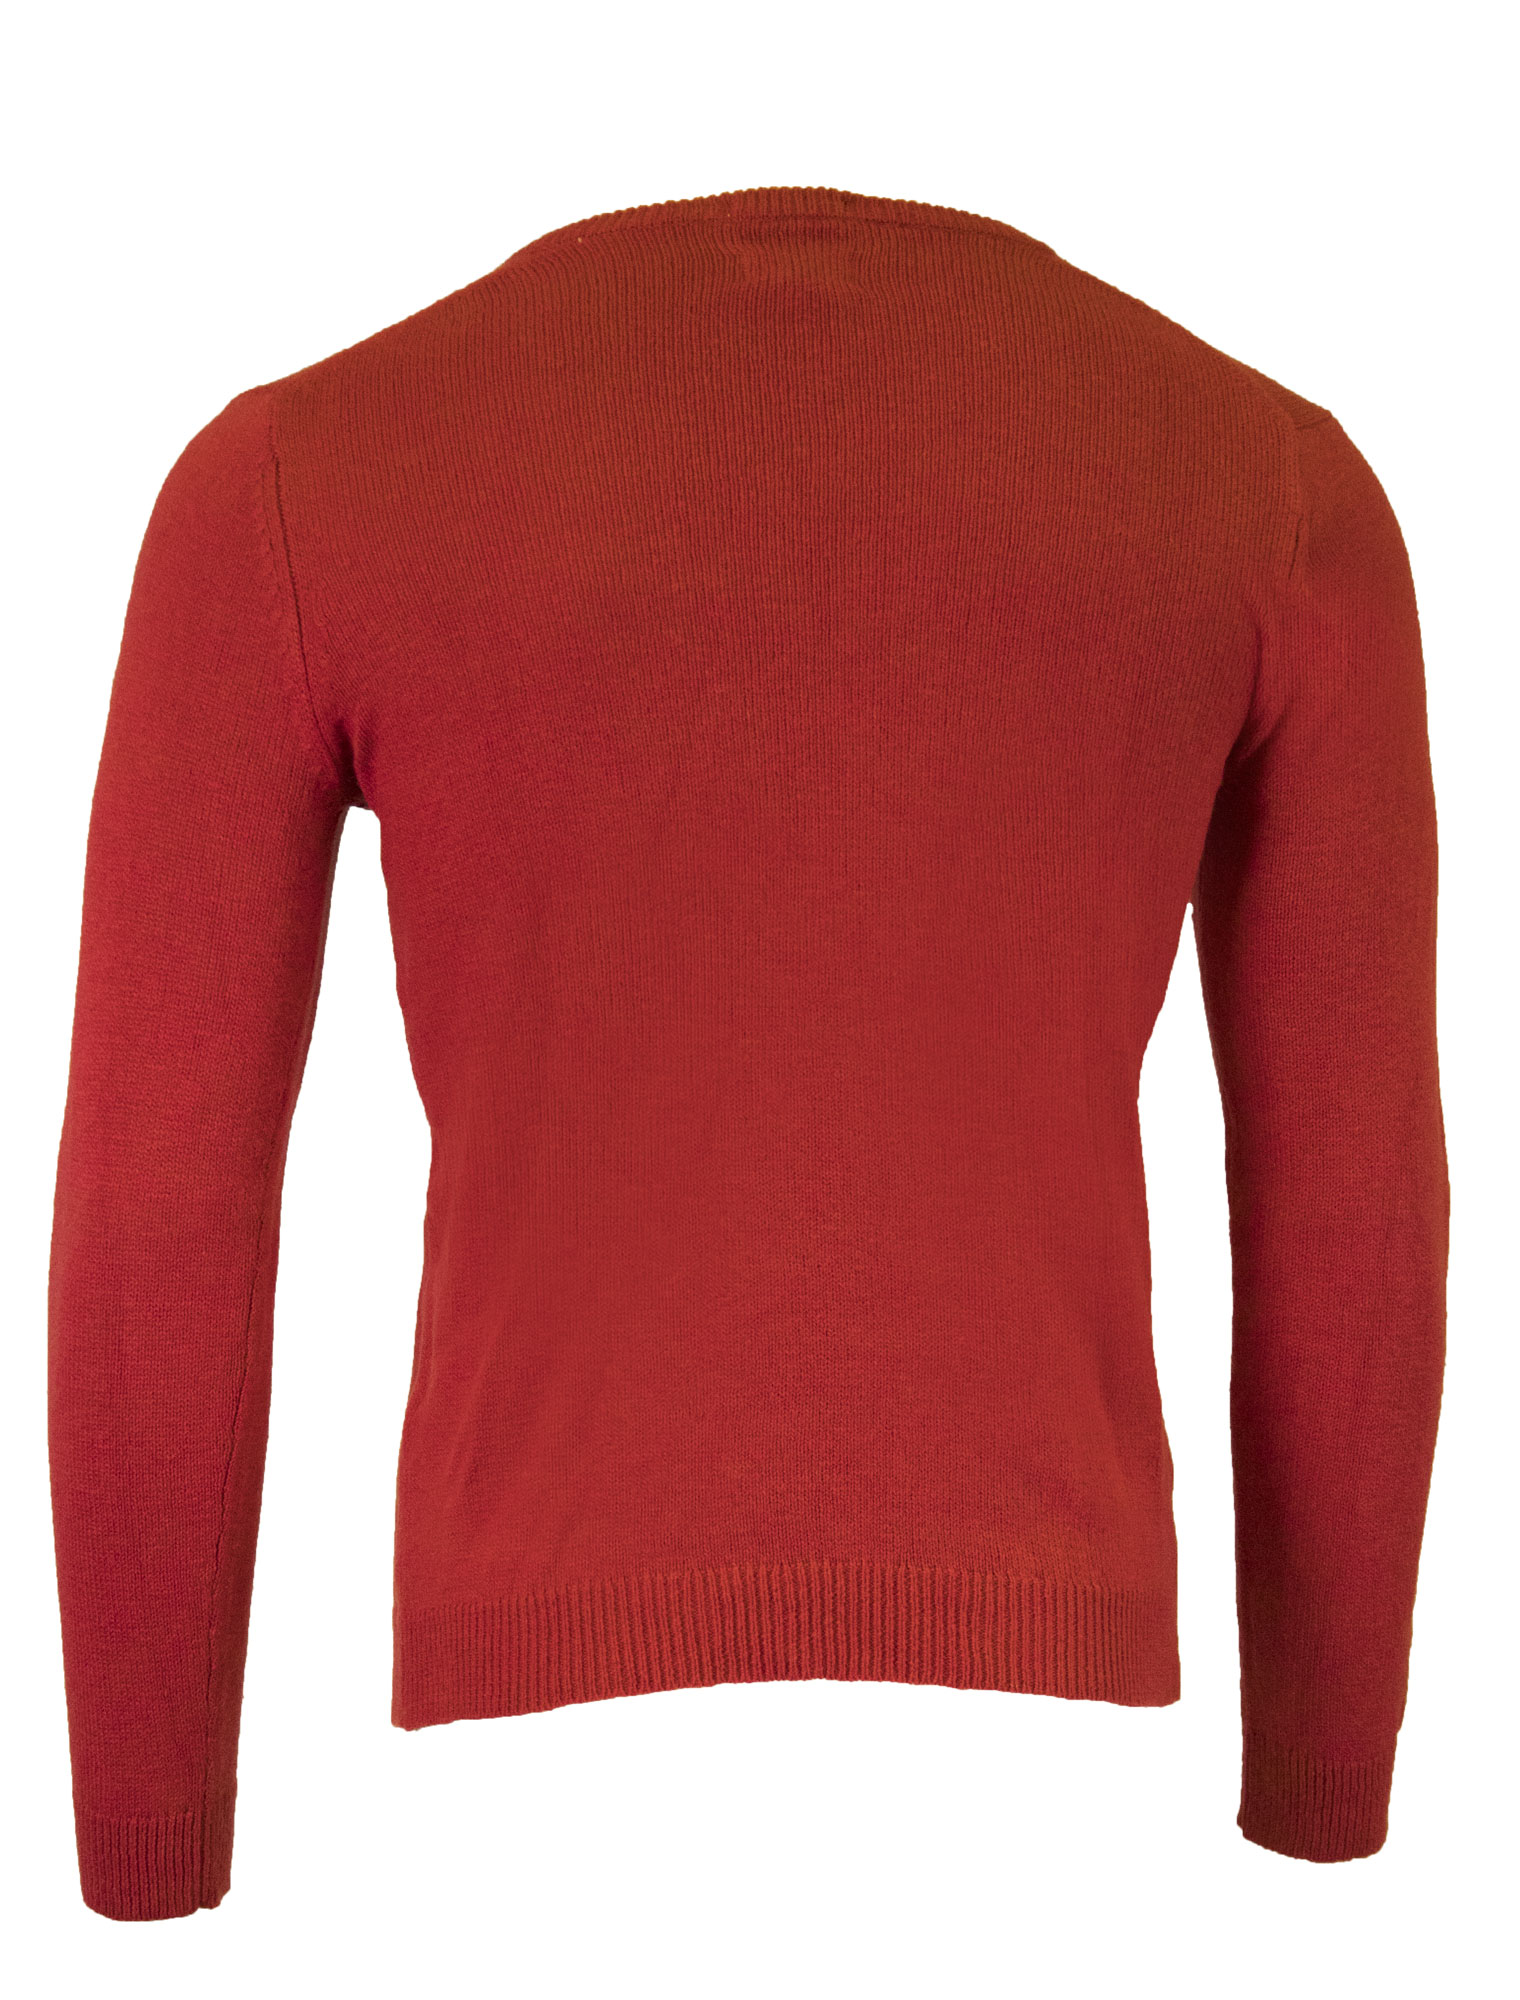 GANT Raspberry Men's The Vee Sweater 84057 Size M $145 NWT | eBay